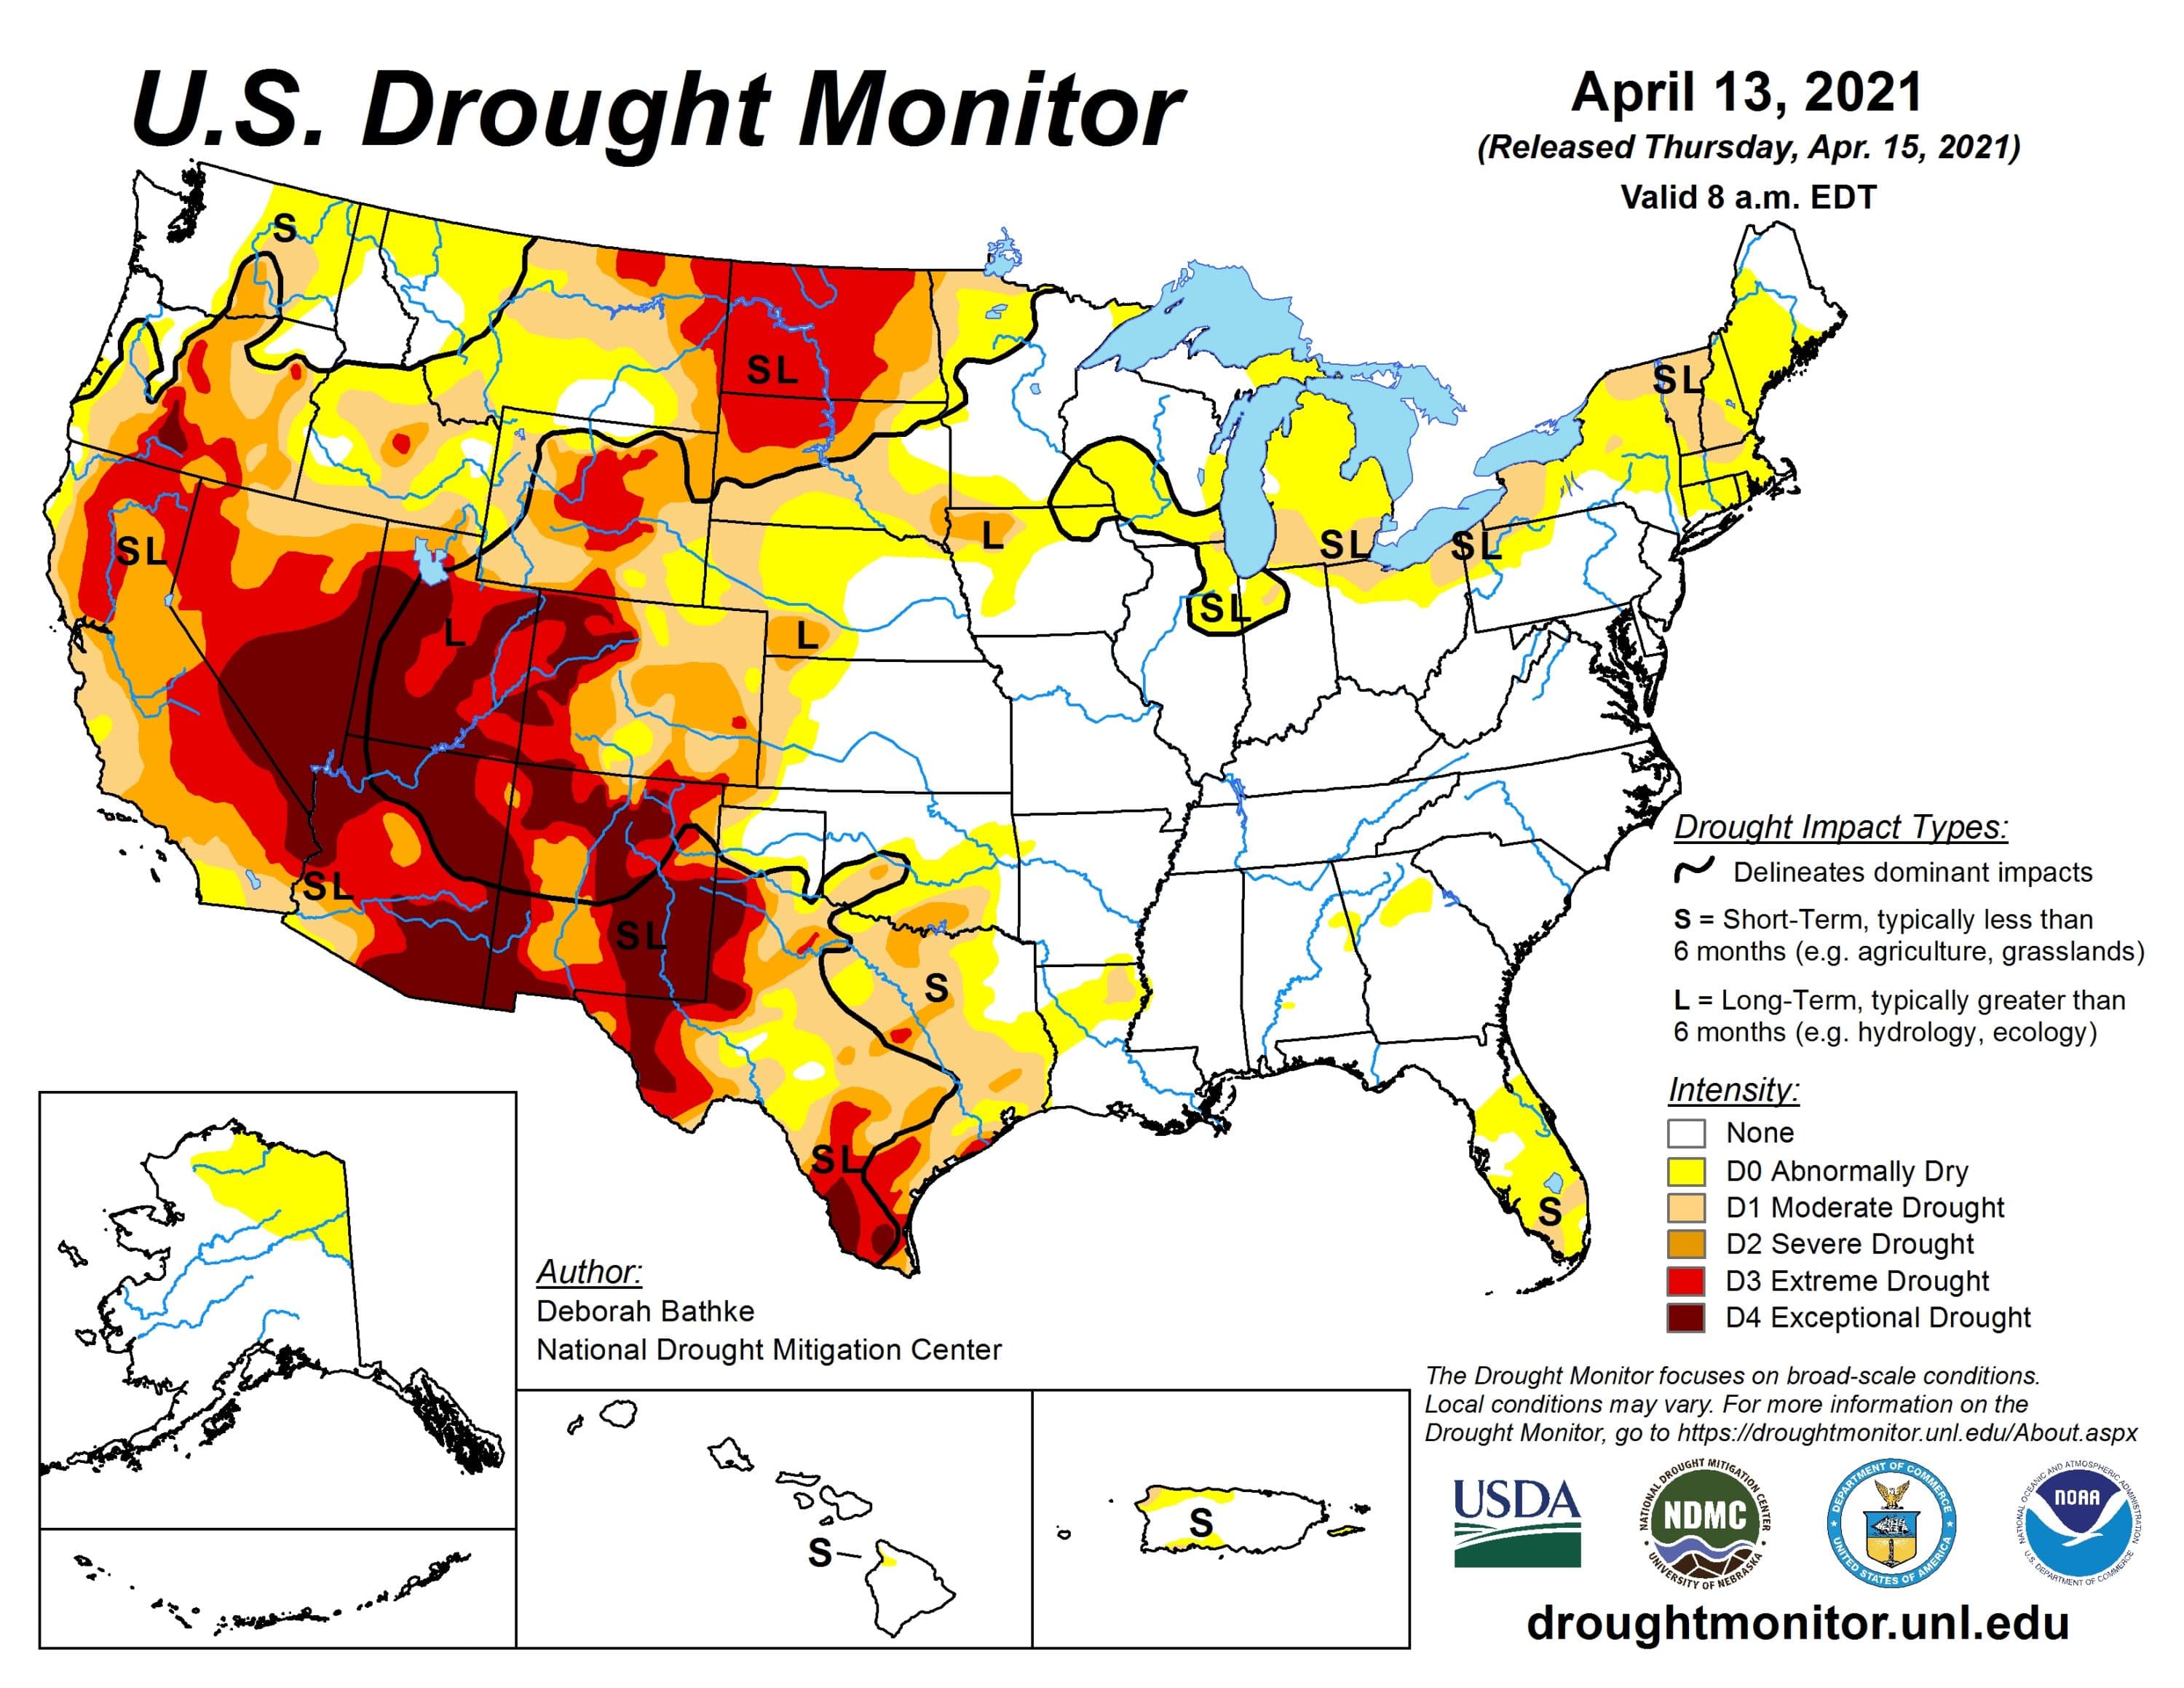 (Deborah Bathke/National Drought Mitigation Center)